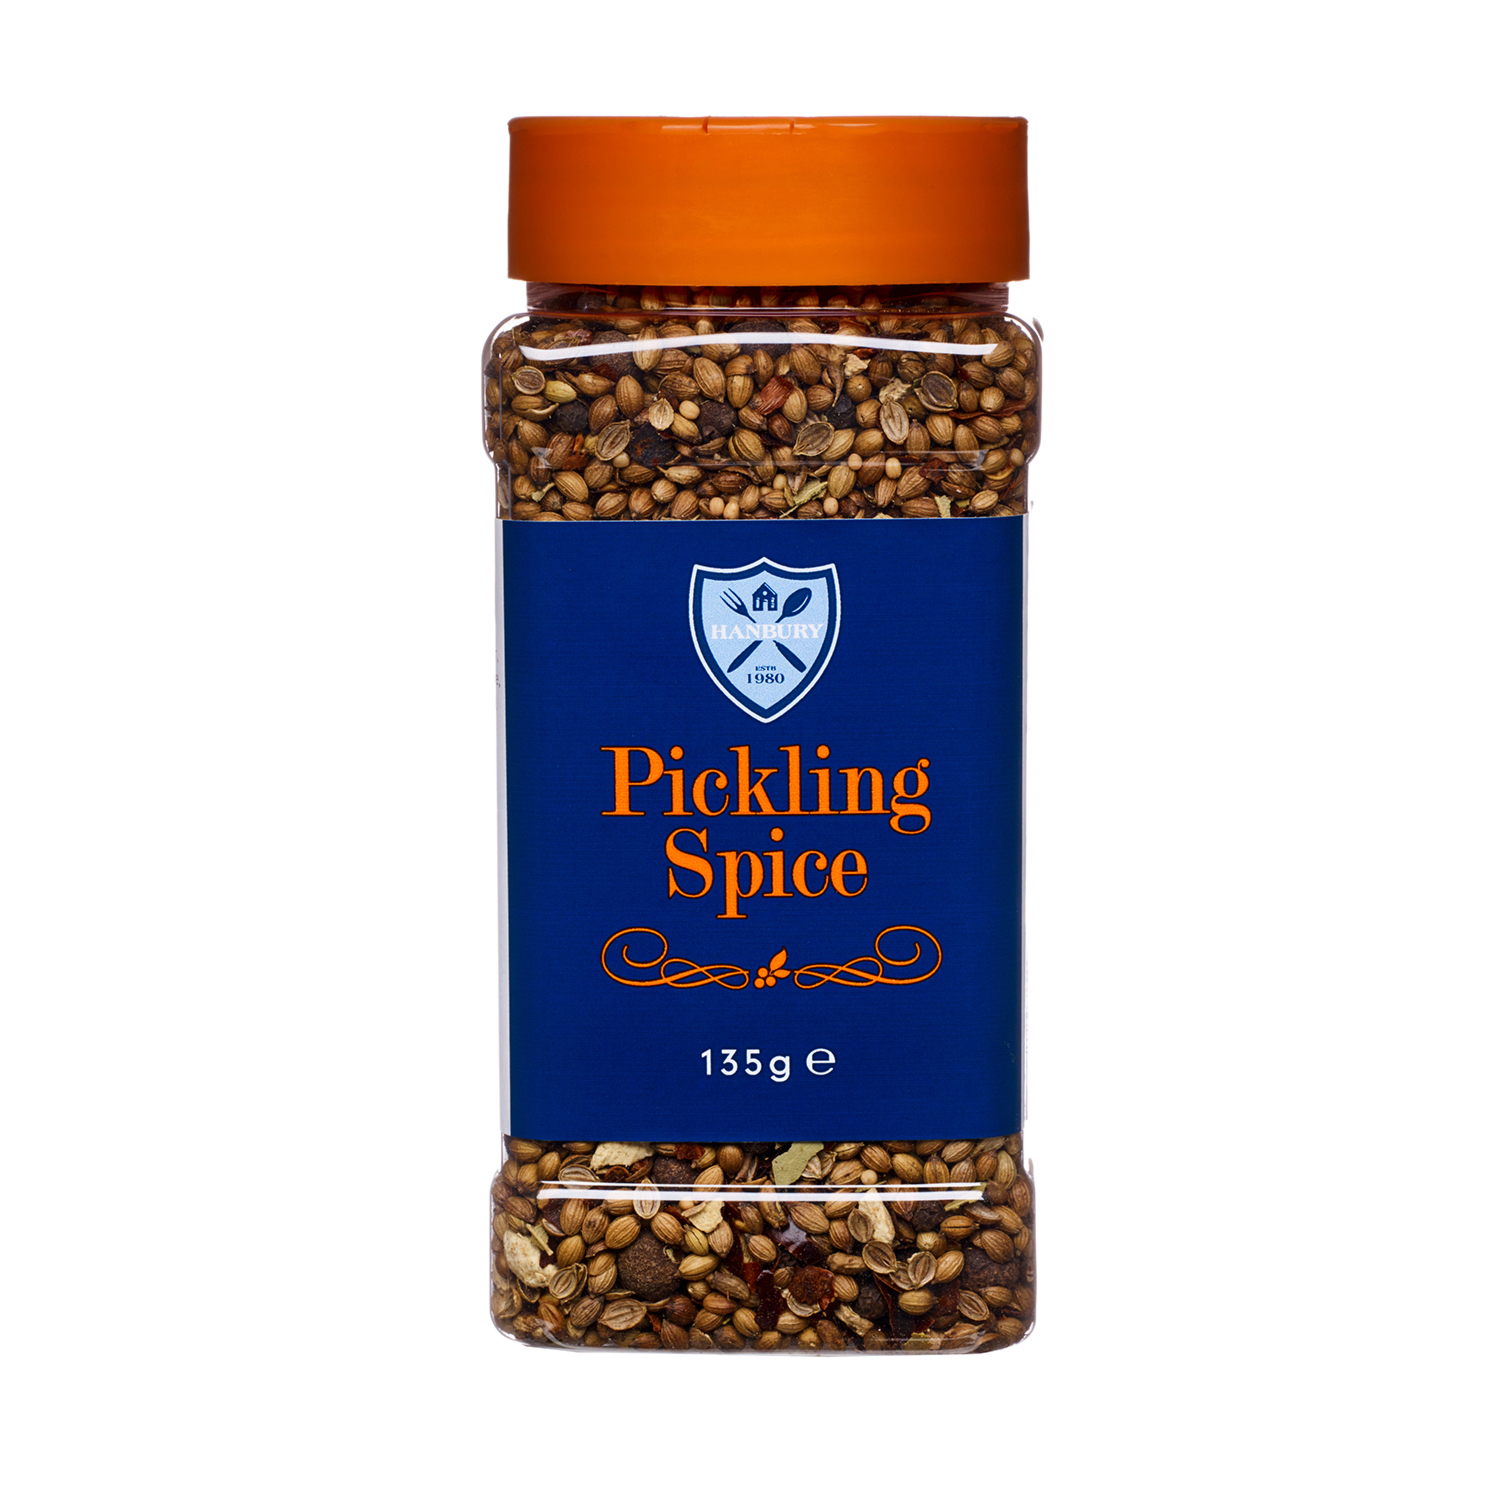 Hanbury Pickling Spice Image